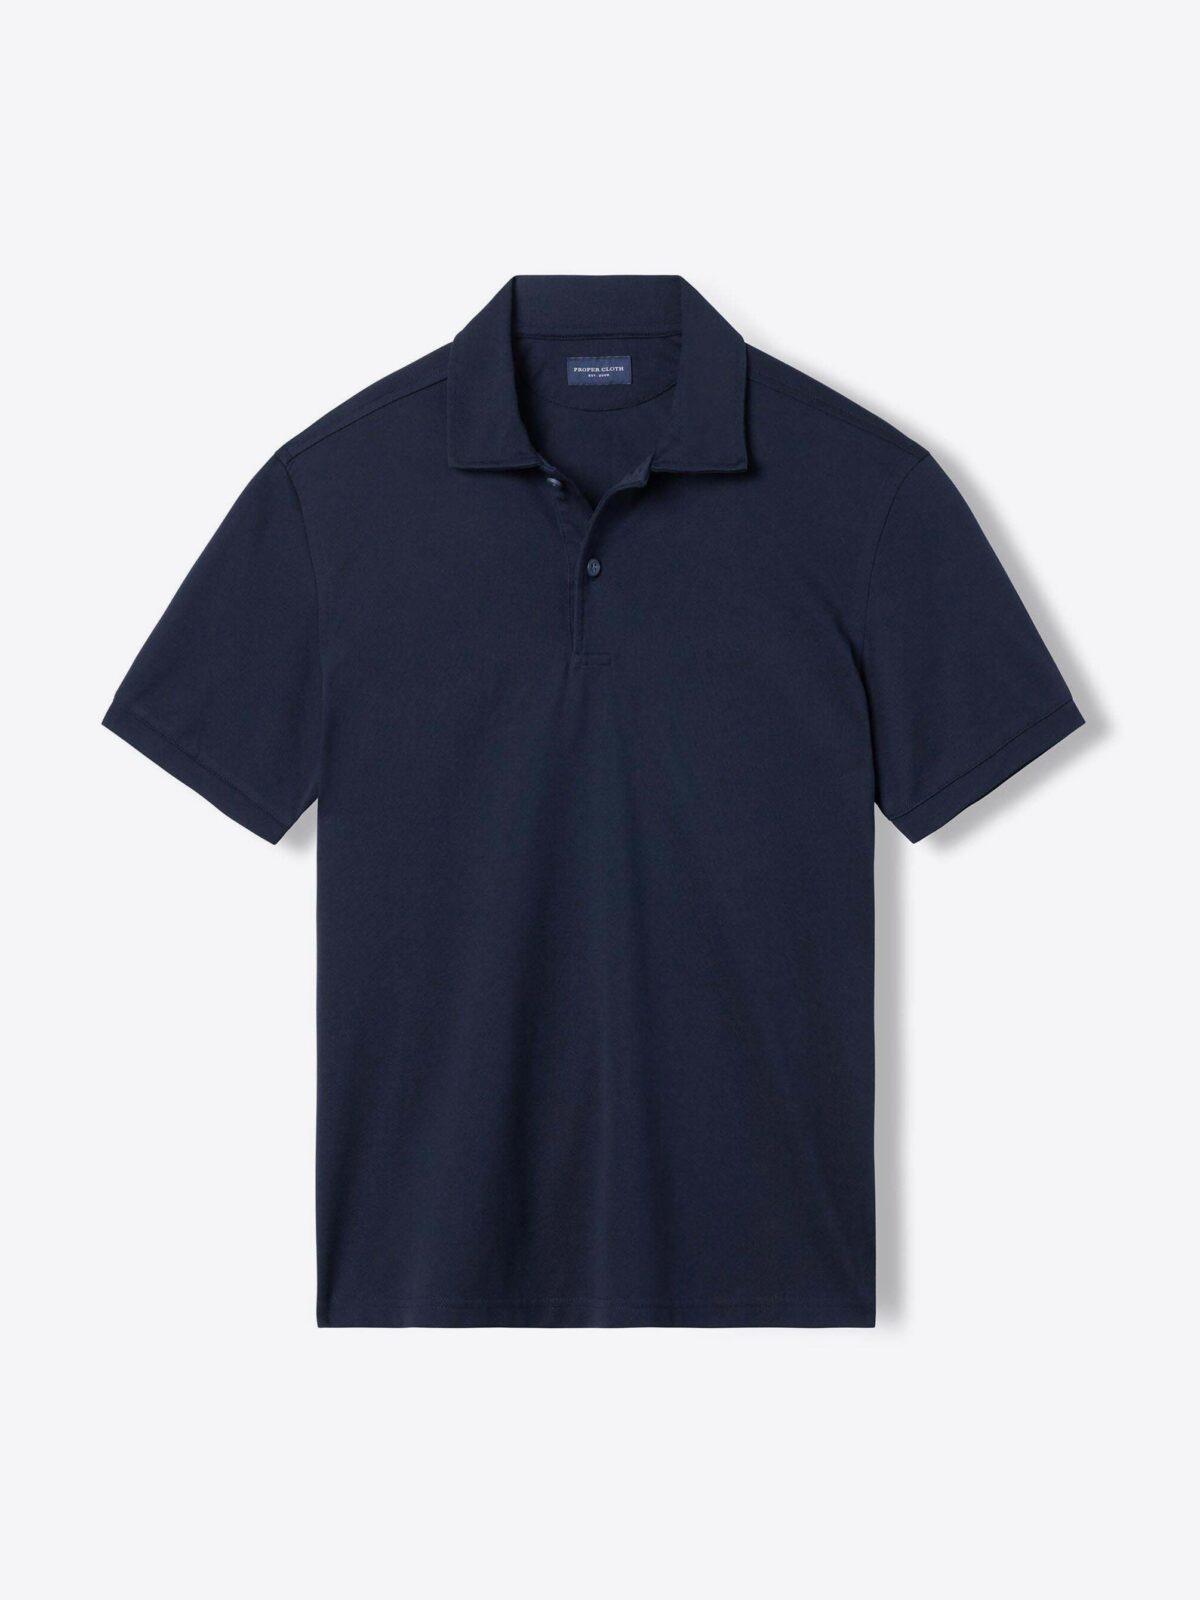 Golf Polo Shirt for Women Cotton Summer Short Sleeves Collar Quick